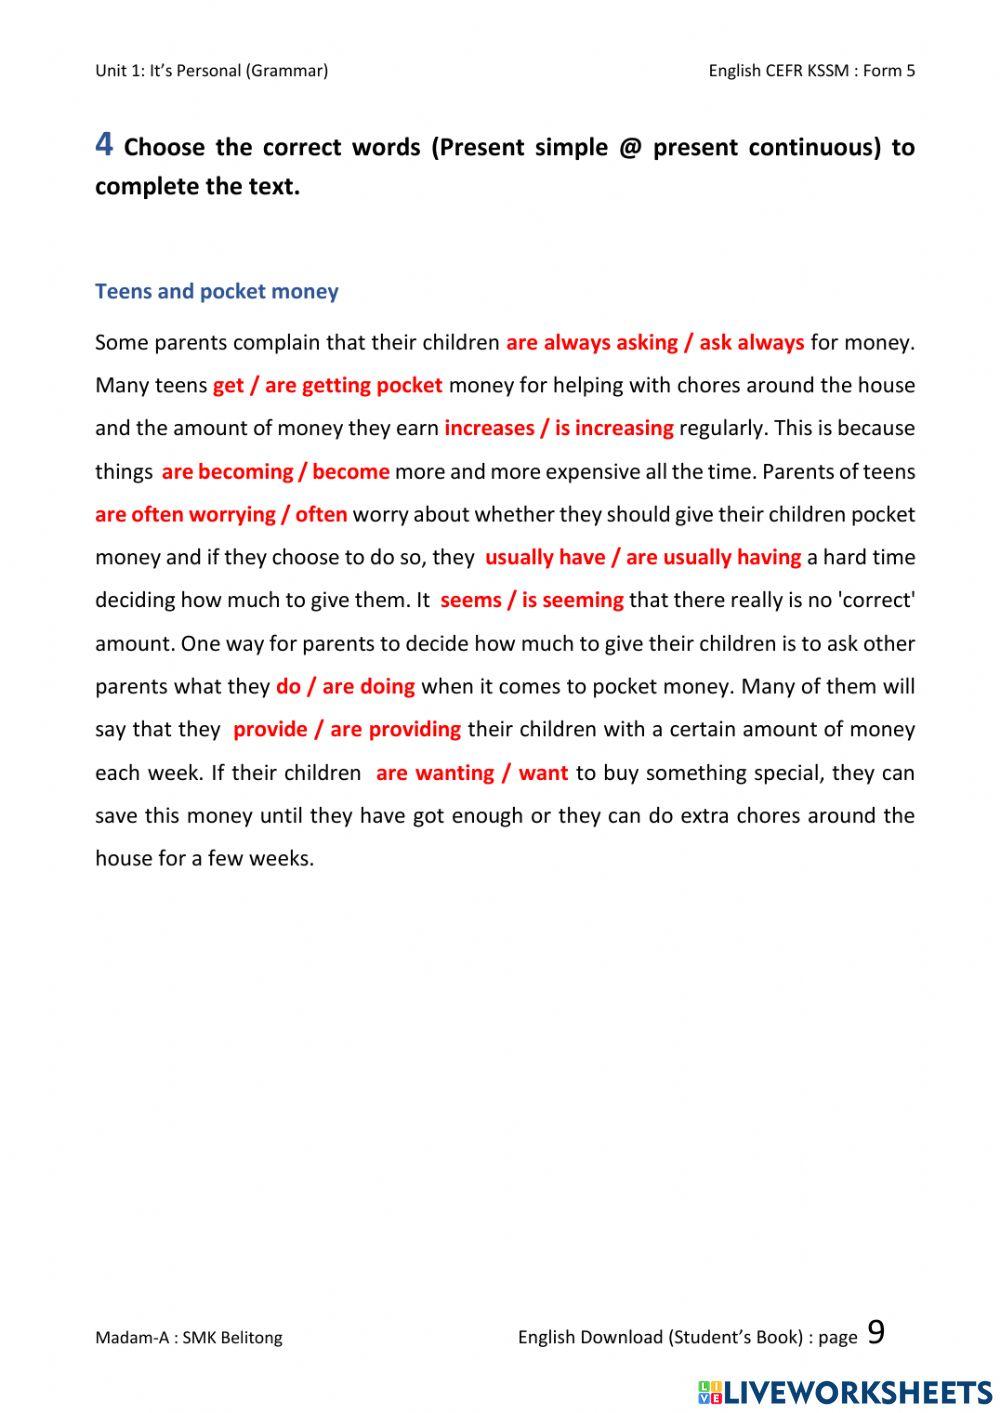 English CEFR Form 5 Unit 1: Page 9-task 4(Grammar)